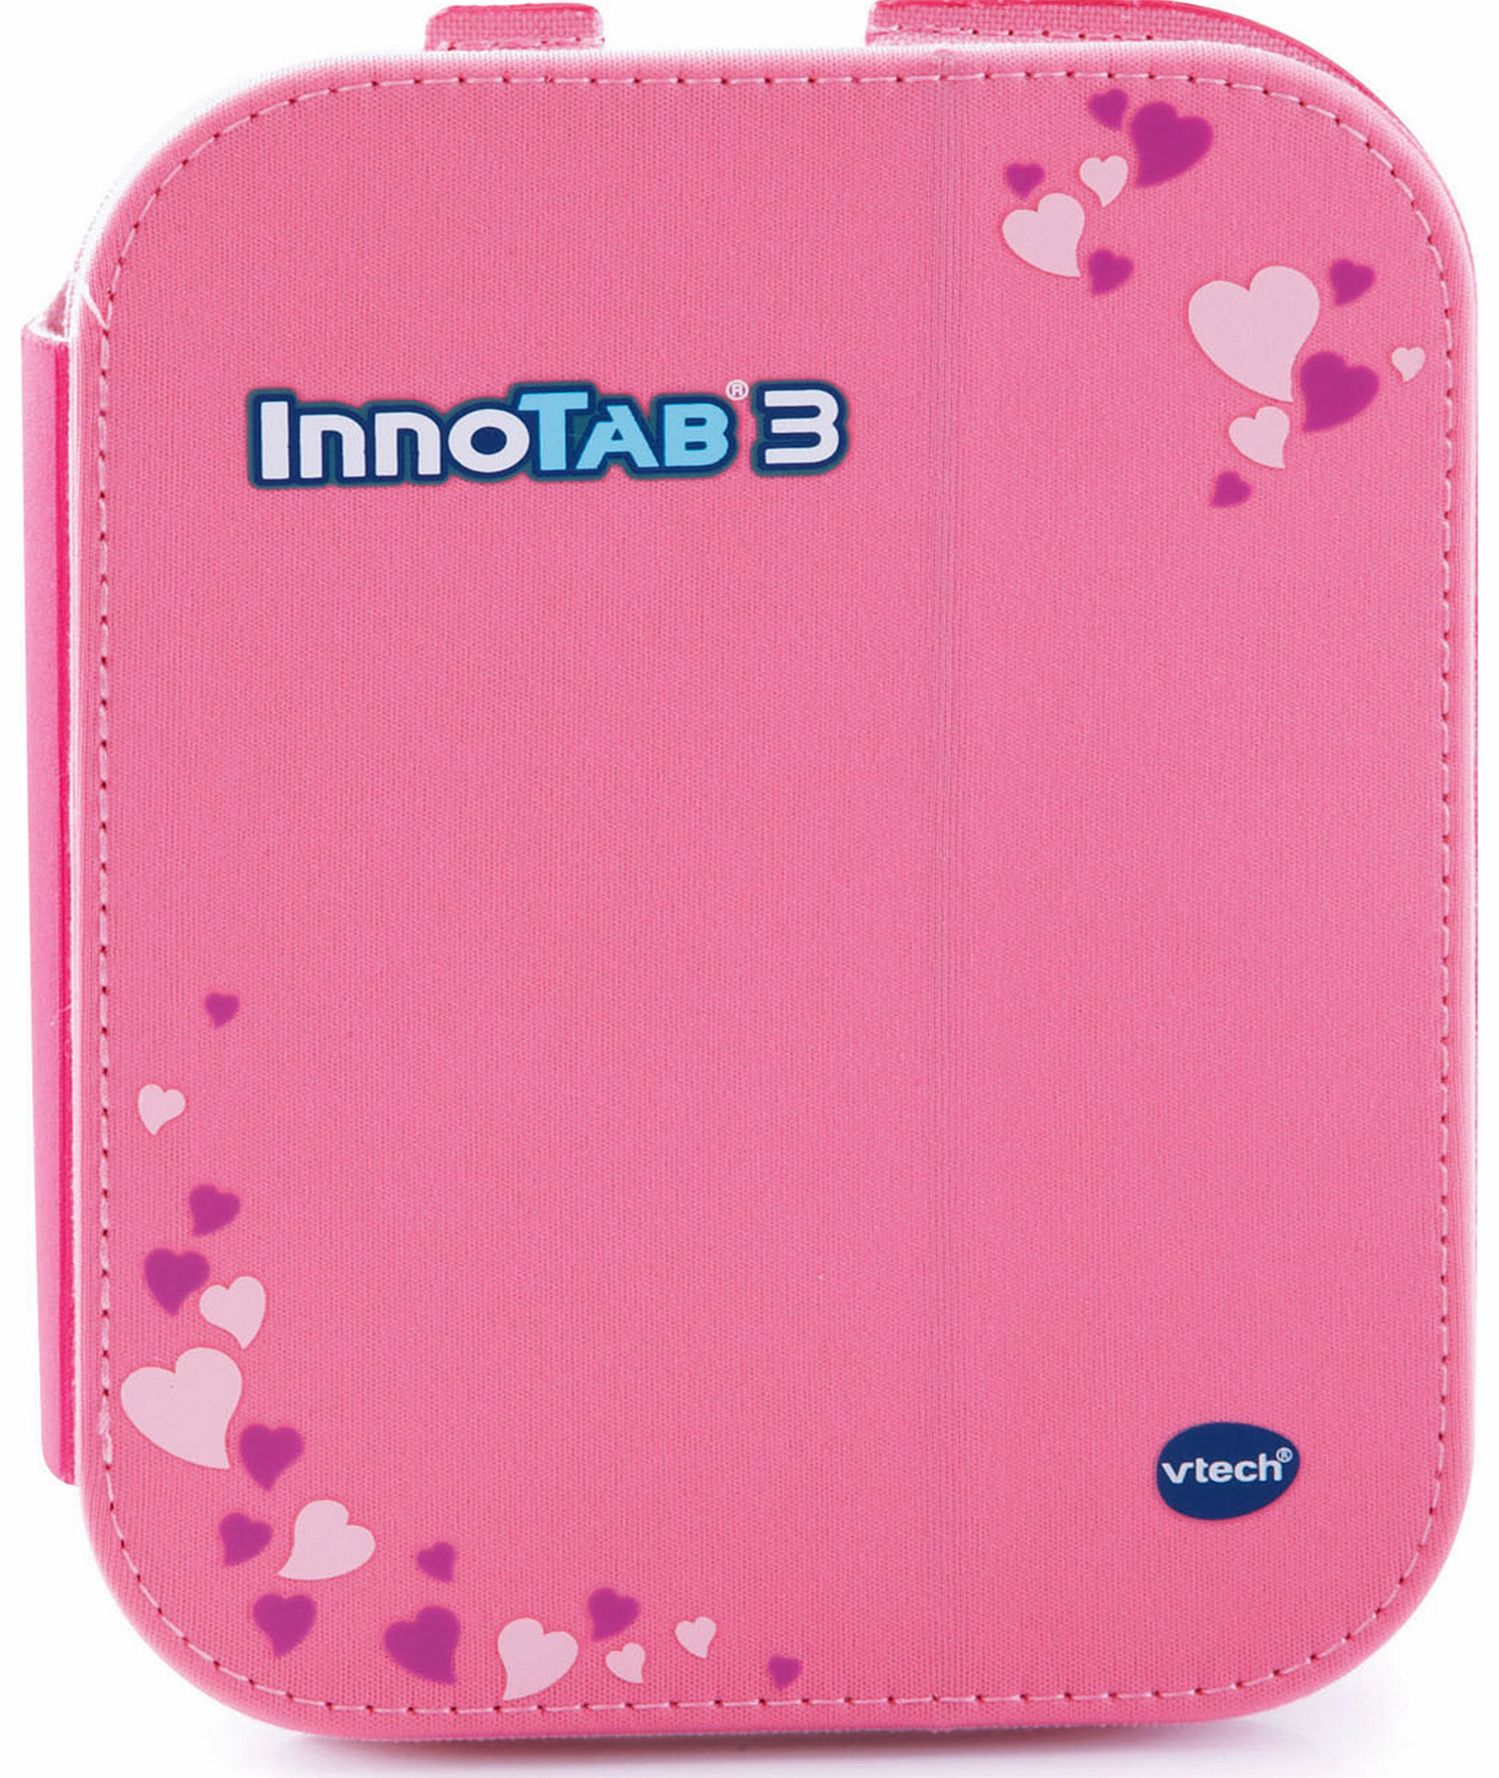 Vtech InnoTab 3 Folio Case - Pink